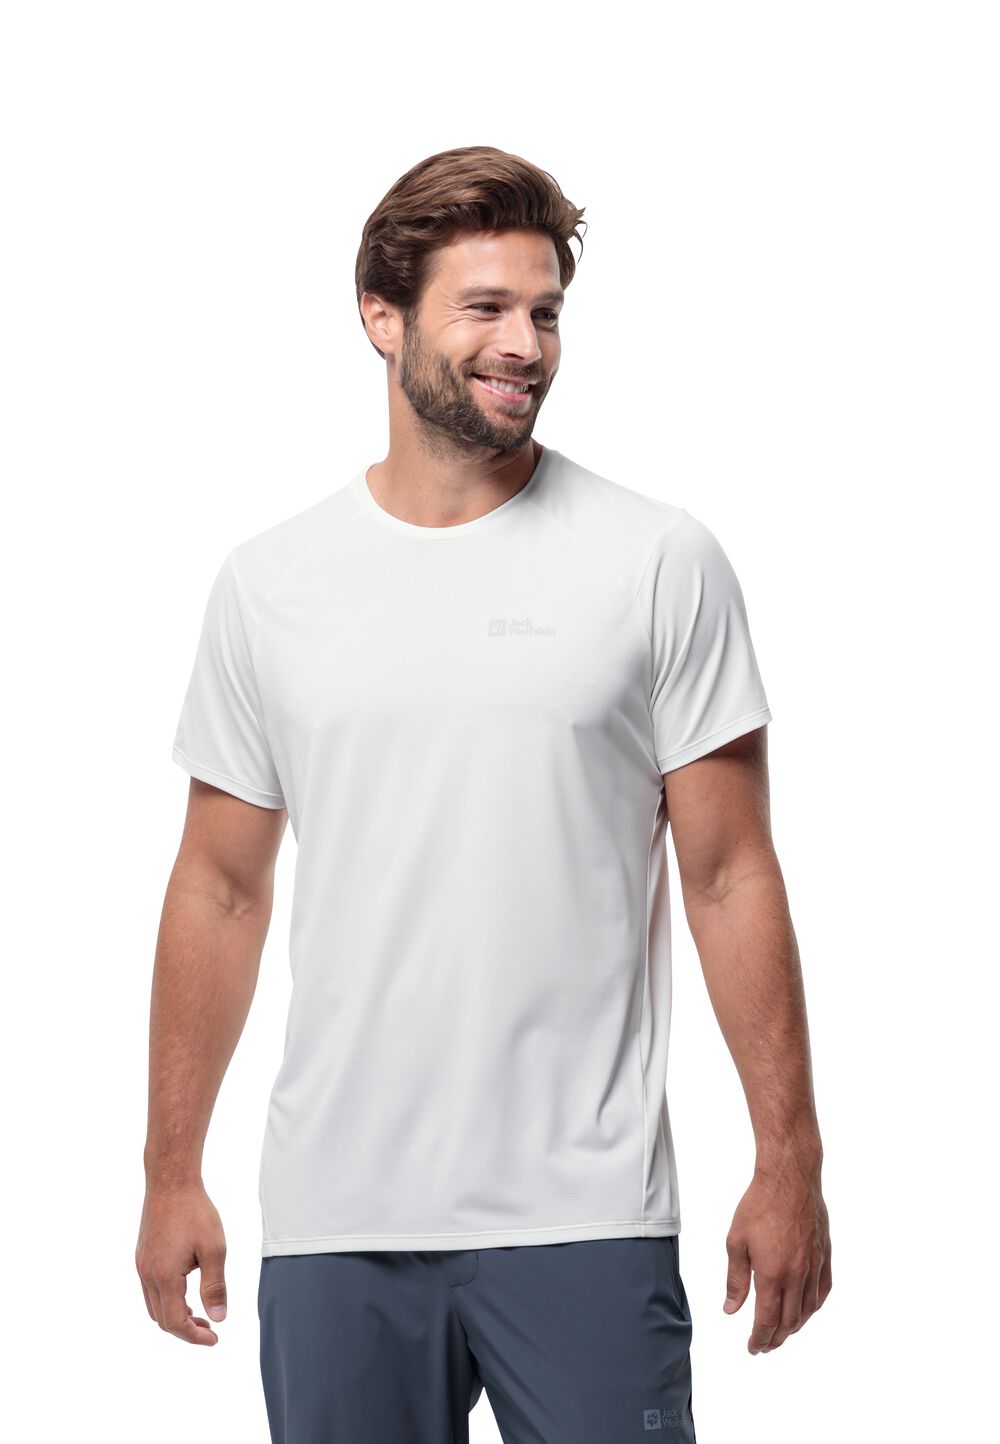 Jack Wolfskin Prelight Trail T-Shirt Men Functioneel shirt Heren S wit stark white